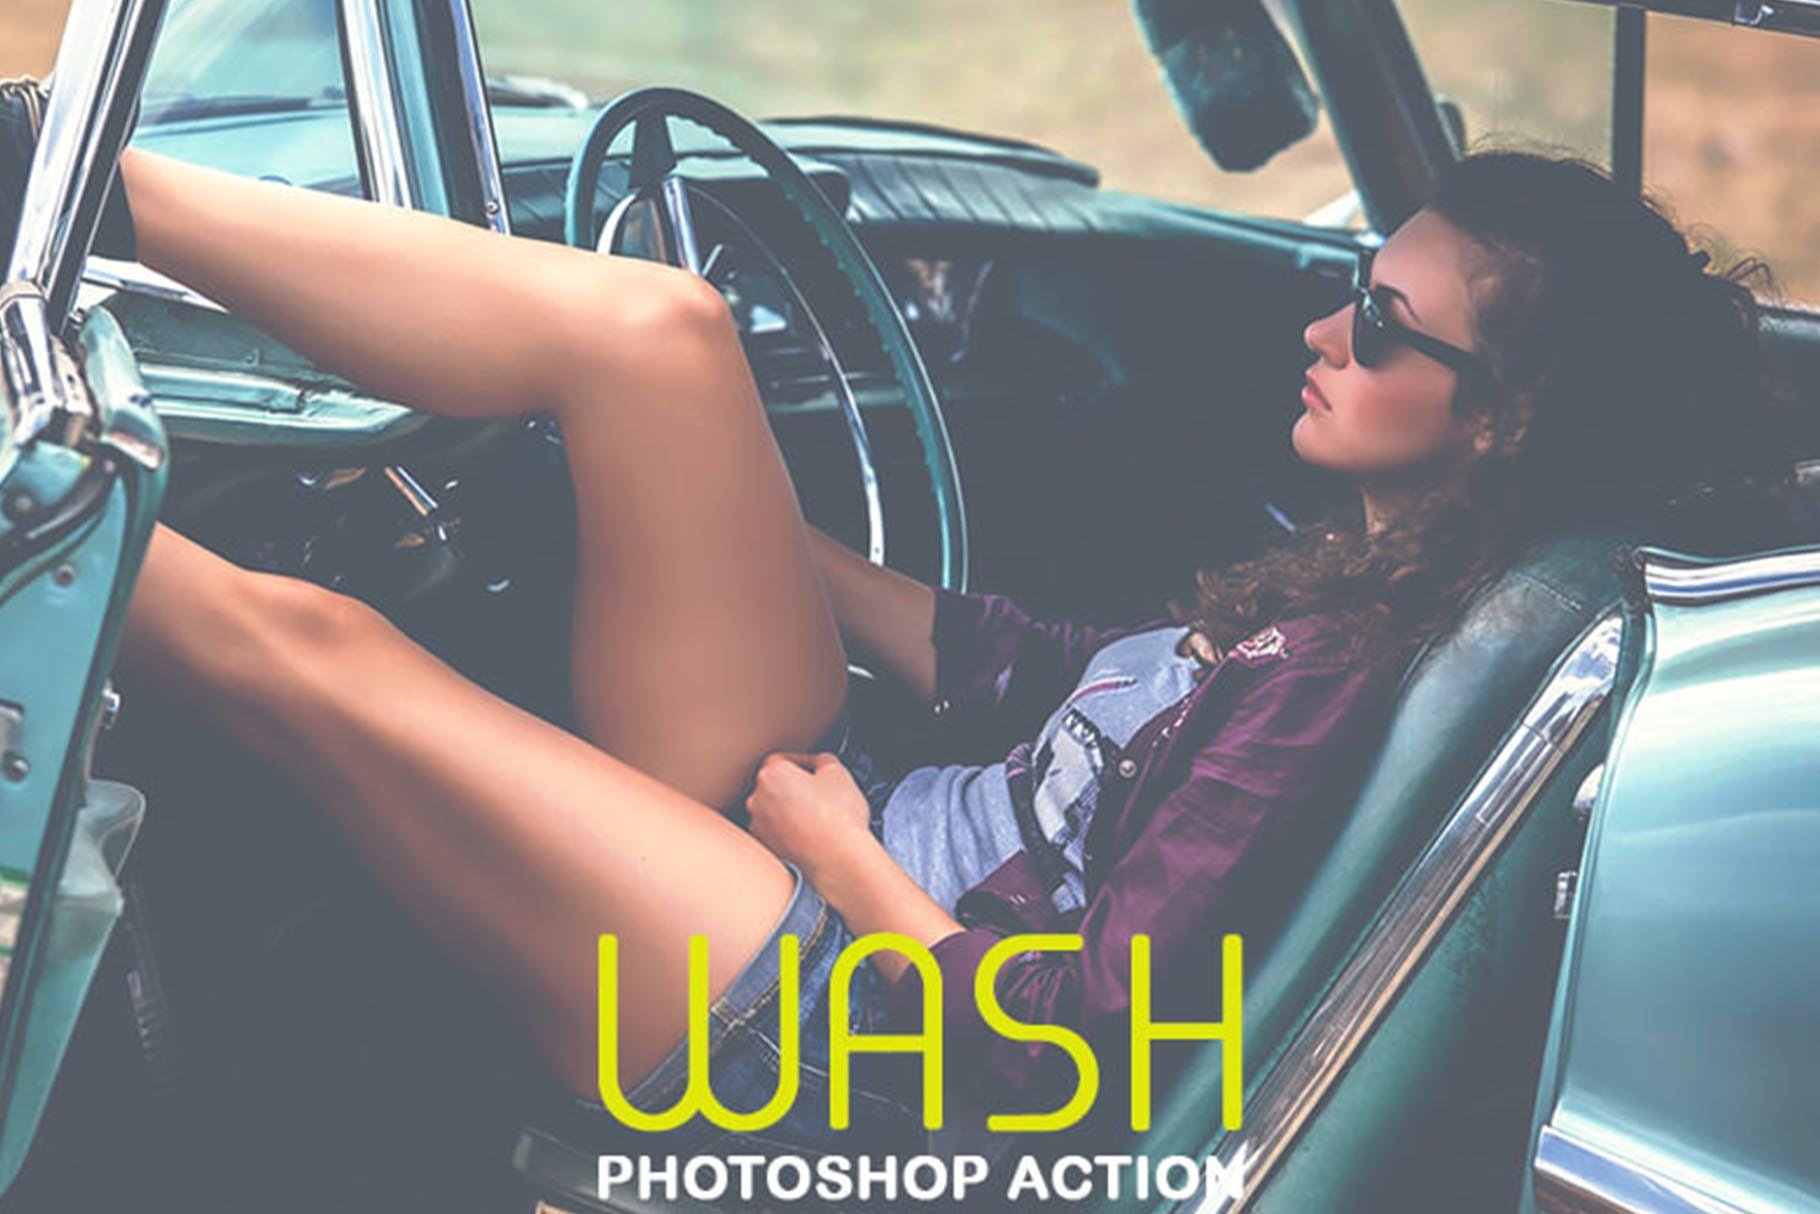 Wash Photoshop Actioncover image.